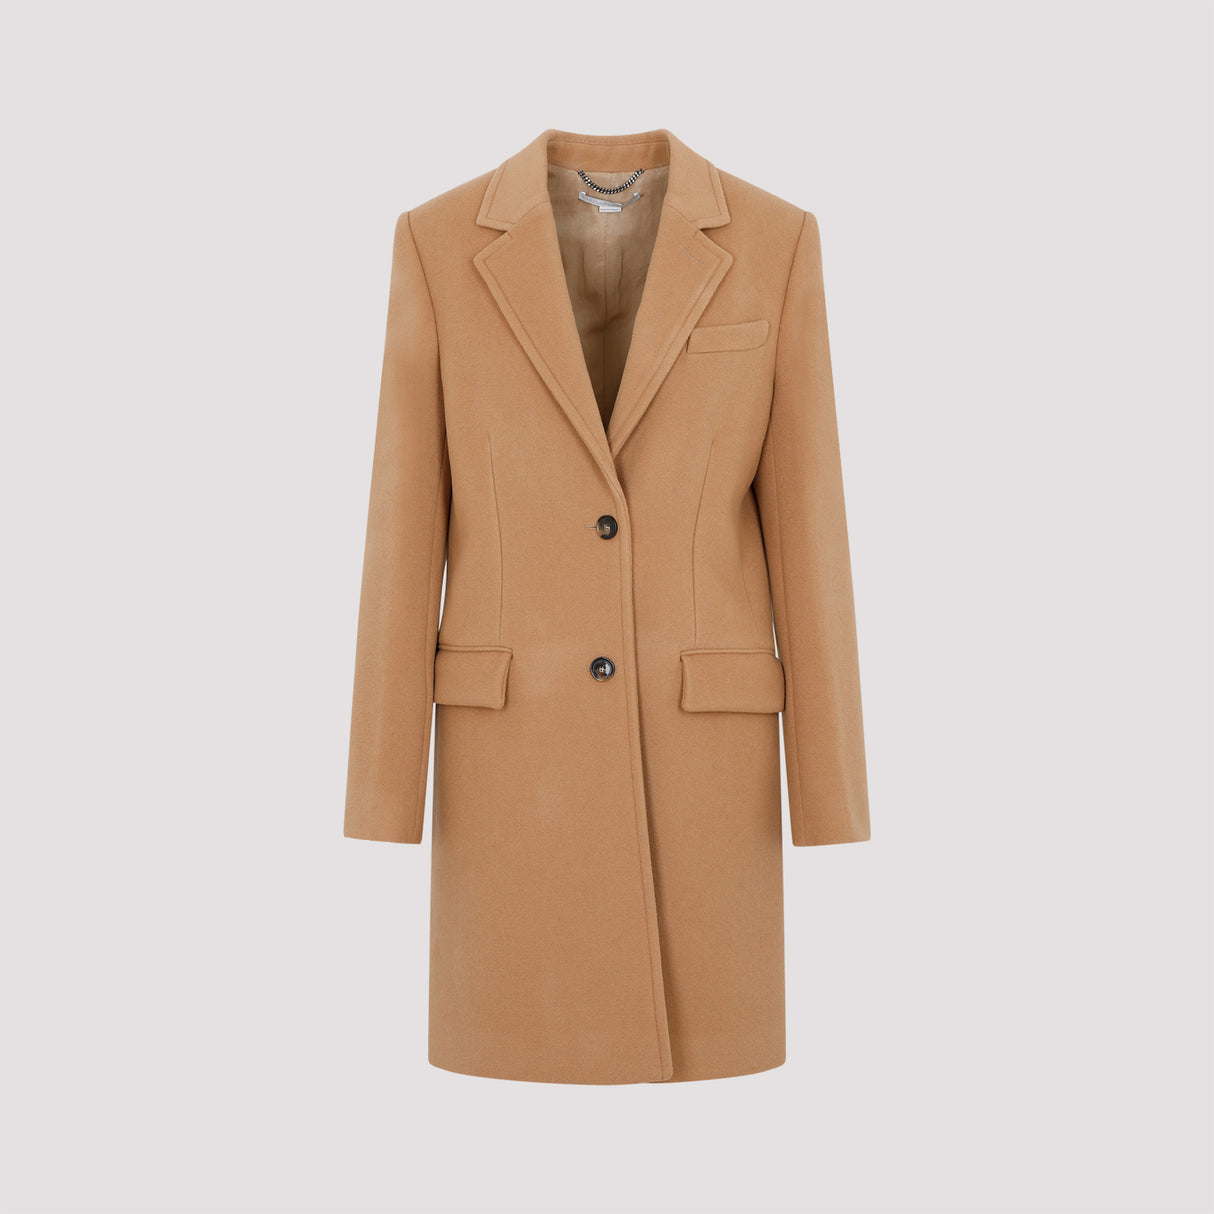 STELLA MCCARTNEY Structured Wool Jacket for Women - Brown